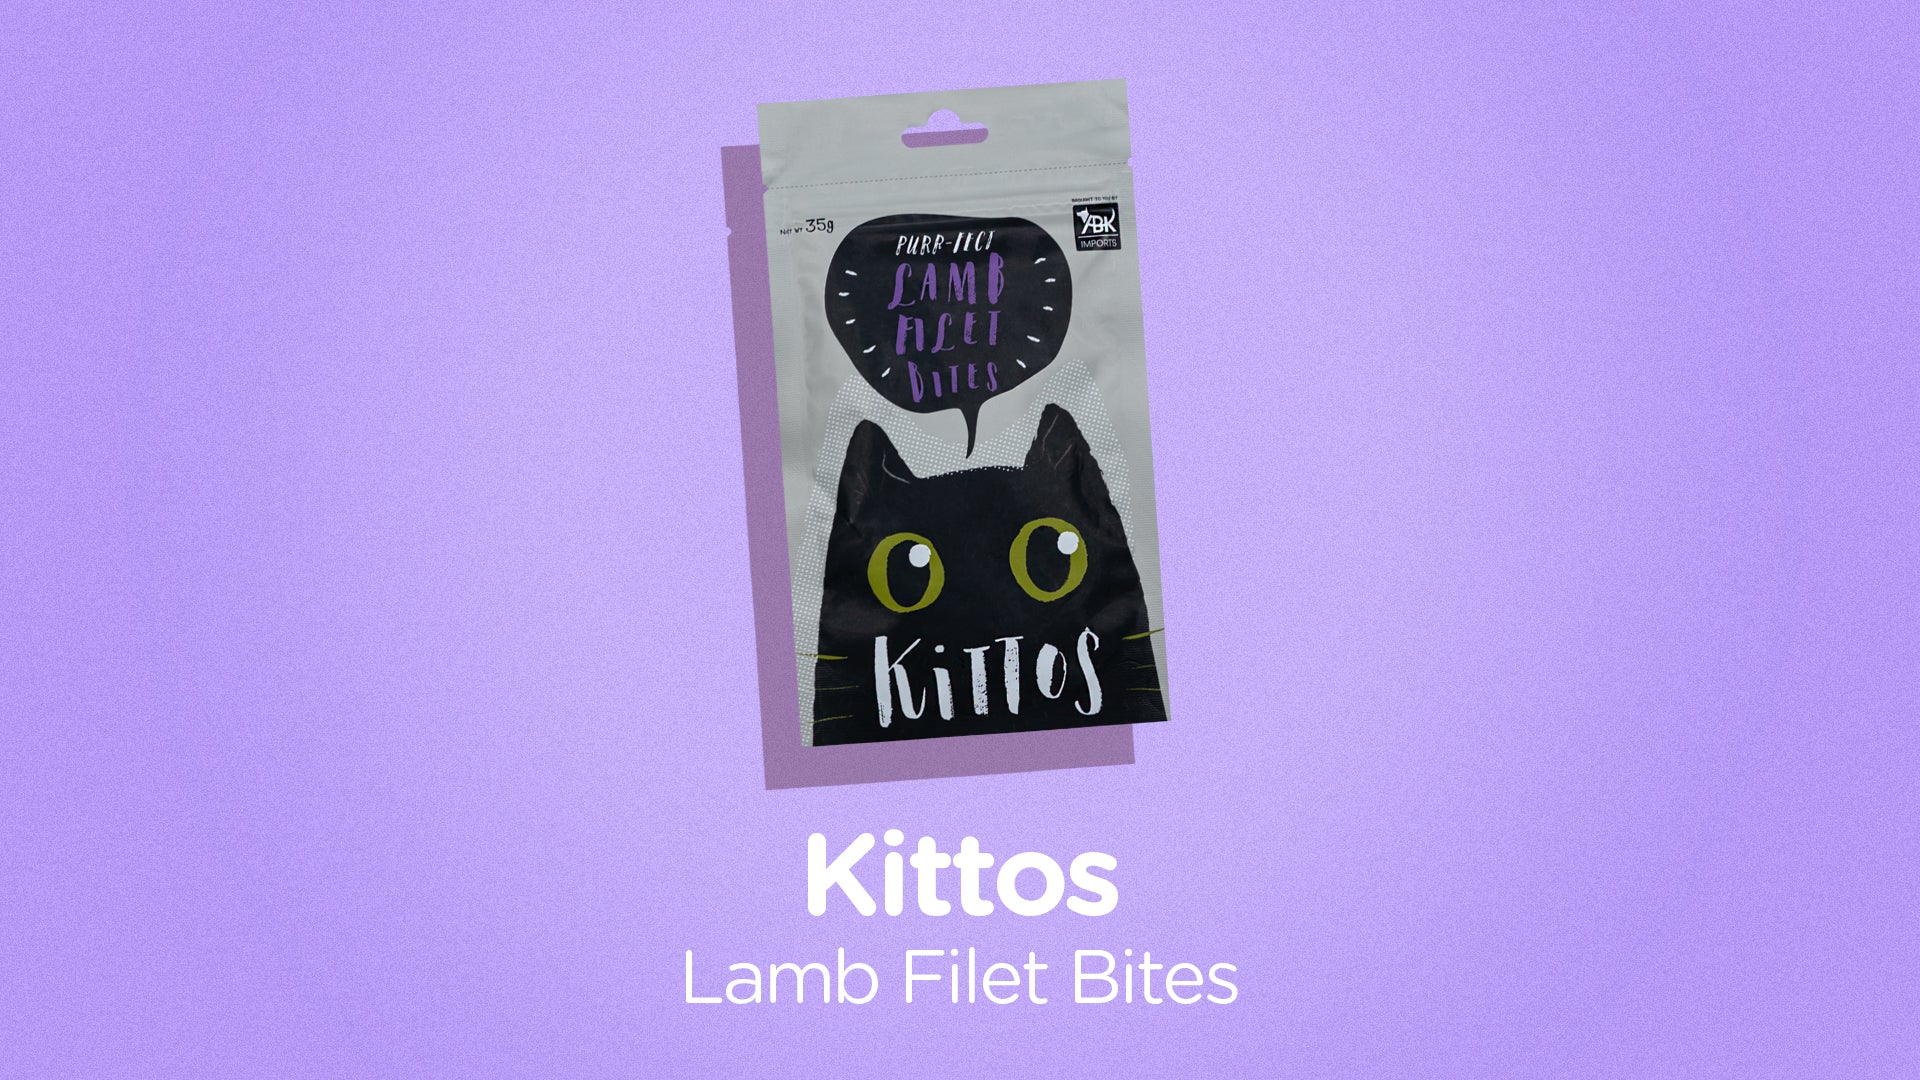 Kittos Cat Treat - Lamb Filet Bites (35g)